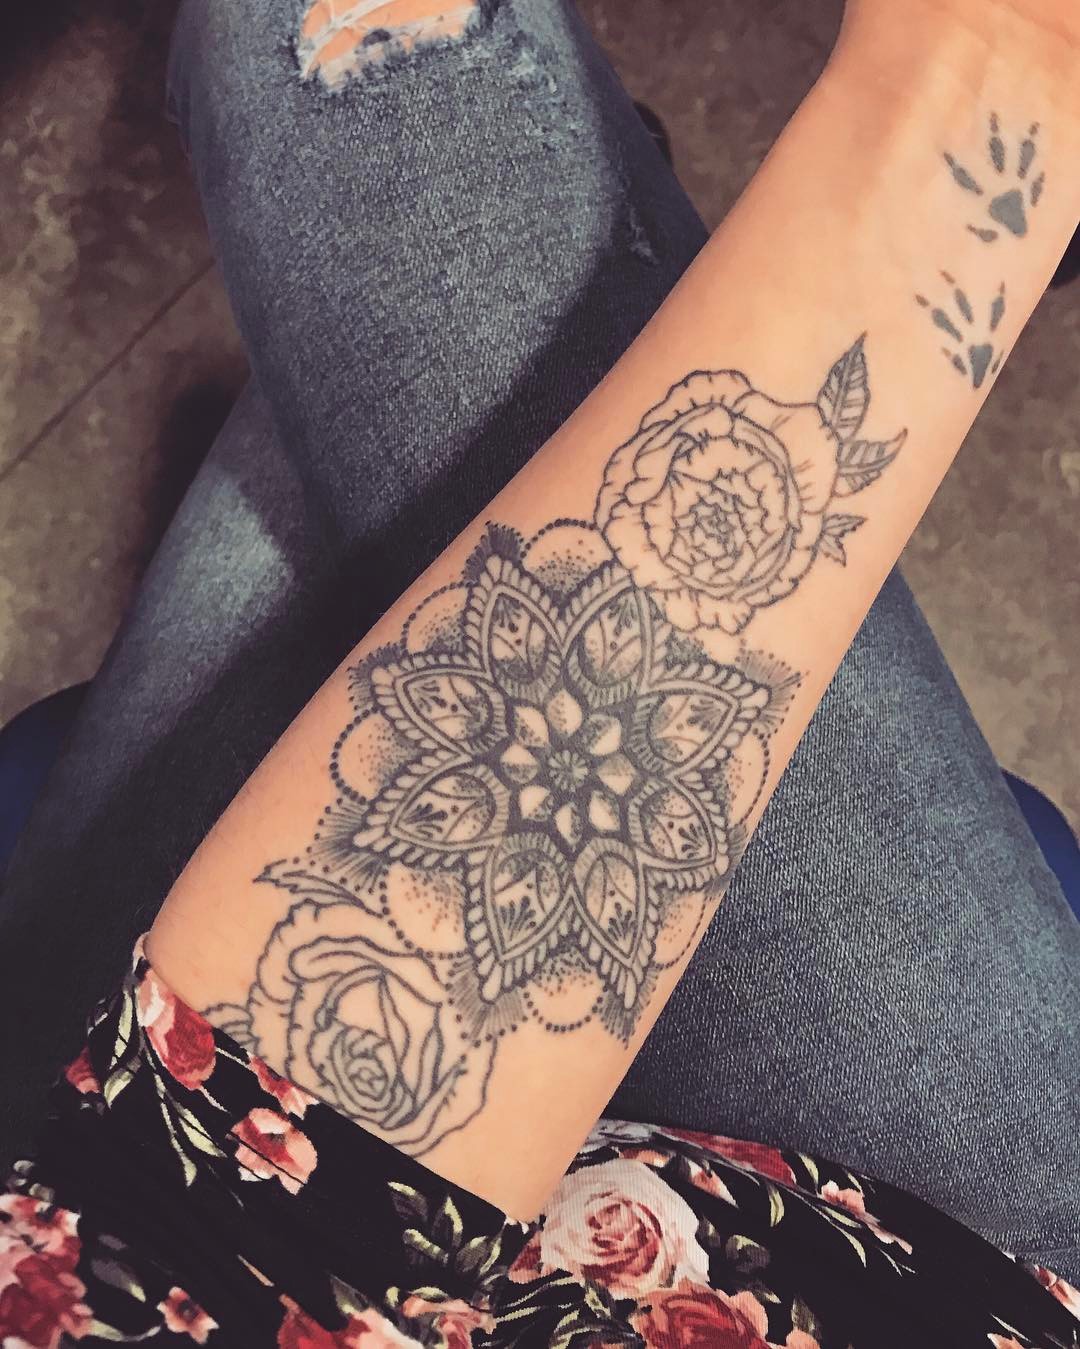 125+ Stunning Arm Tattoos For Women - Meaningful Feminine ...